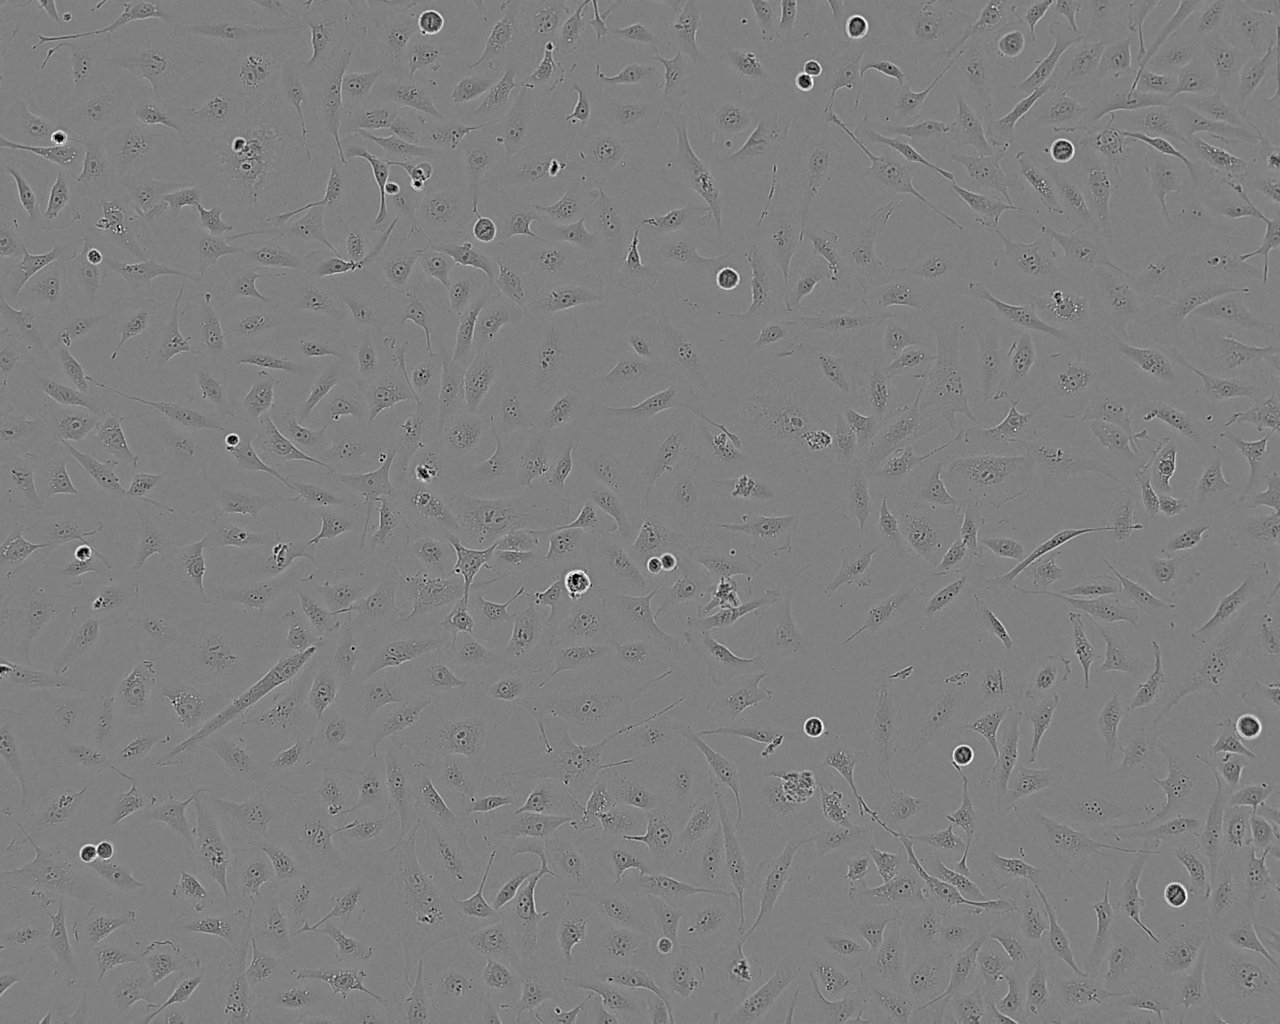 IPEC-J2 epithelioid cells猪小肠上皮细胞系